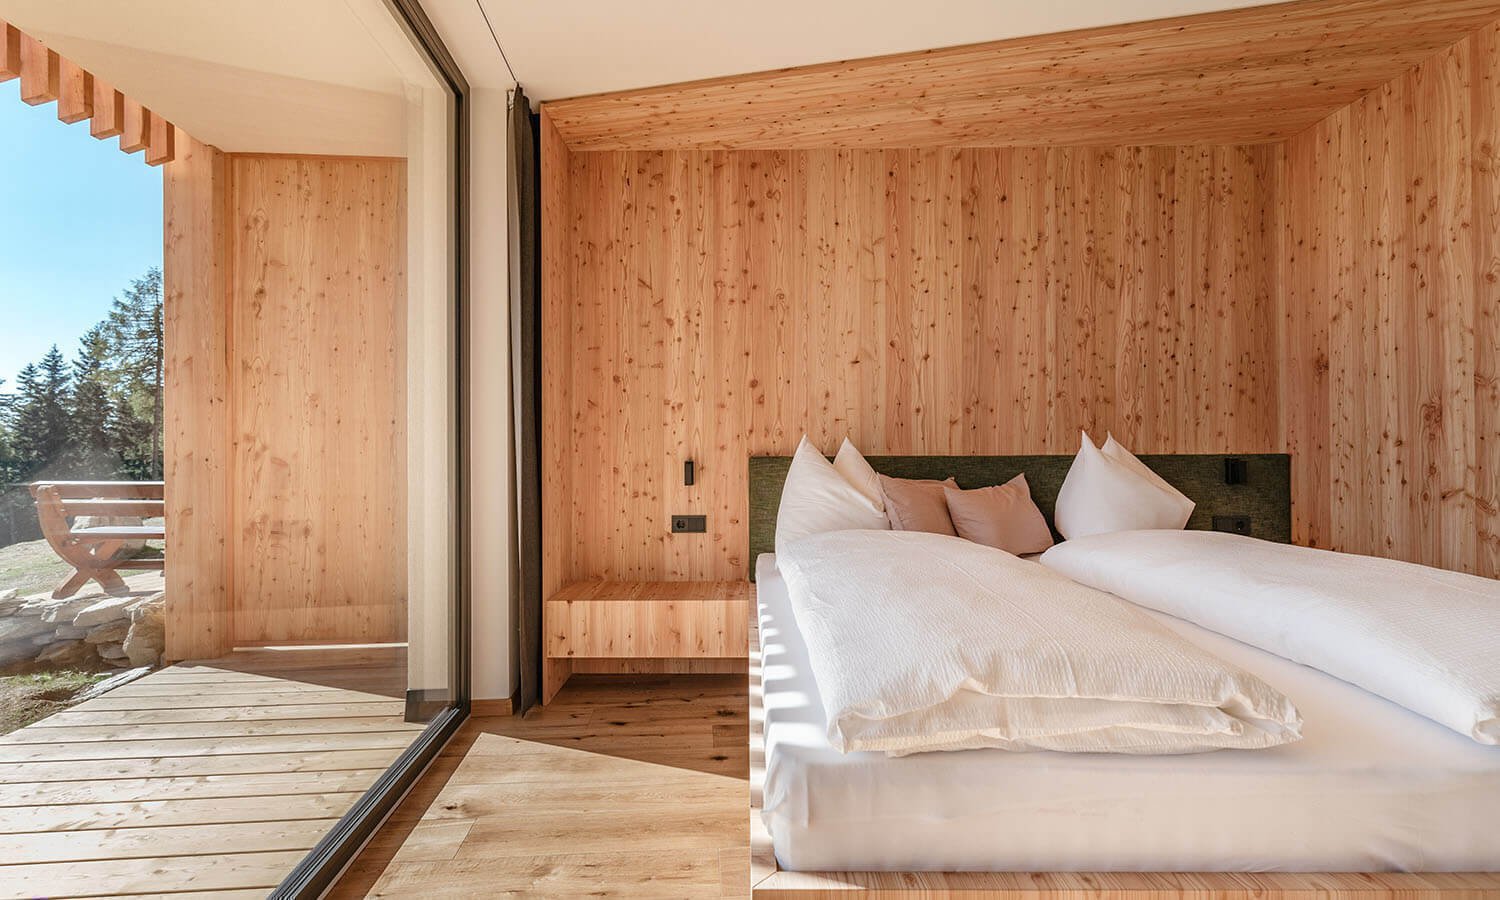 Double room “Rodenecker Alm” | Oberhauserhütte | Alpine Hotel South Tyrol in the Dolomites